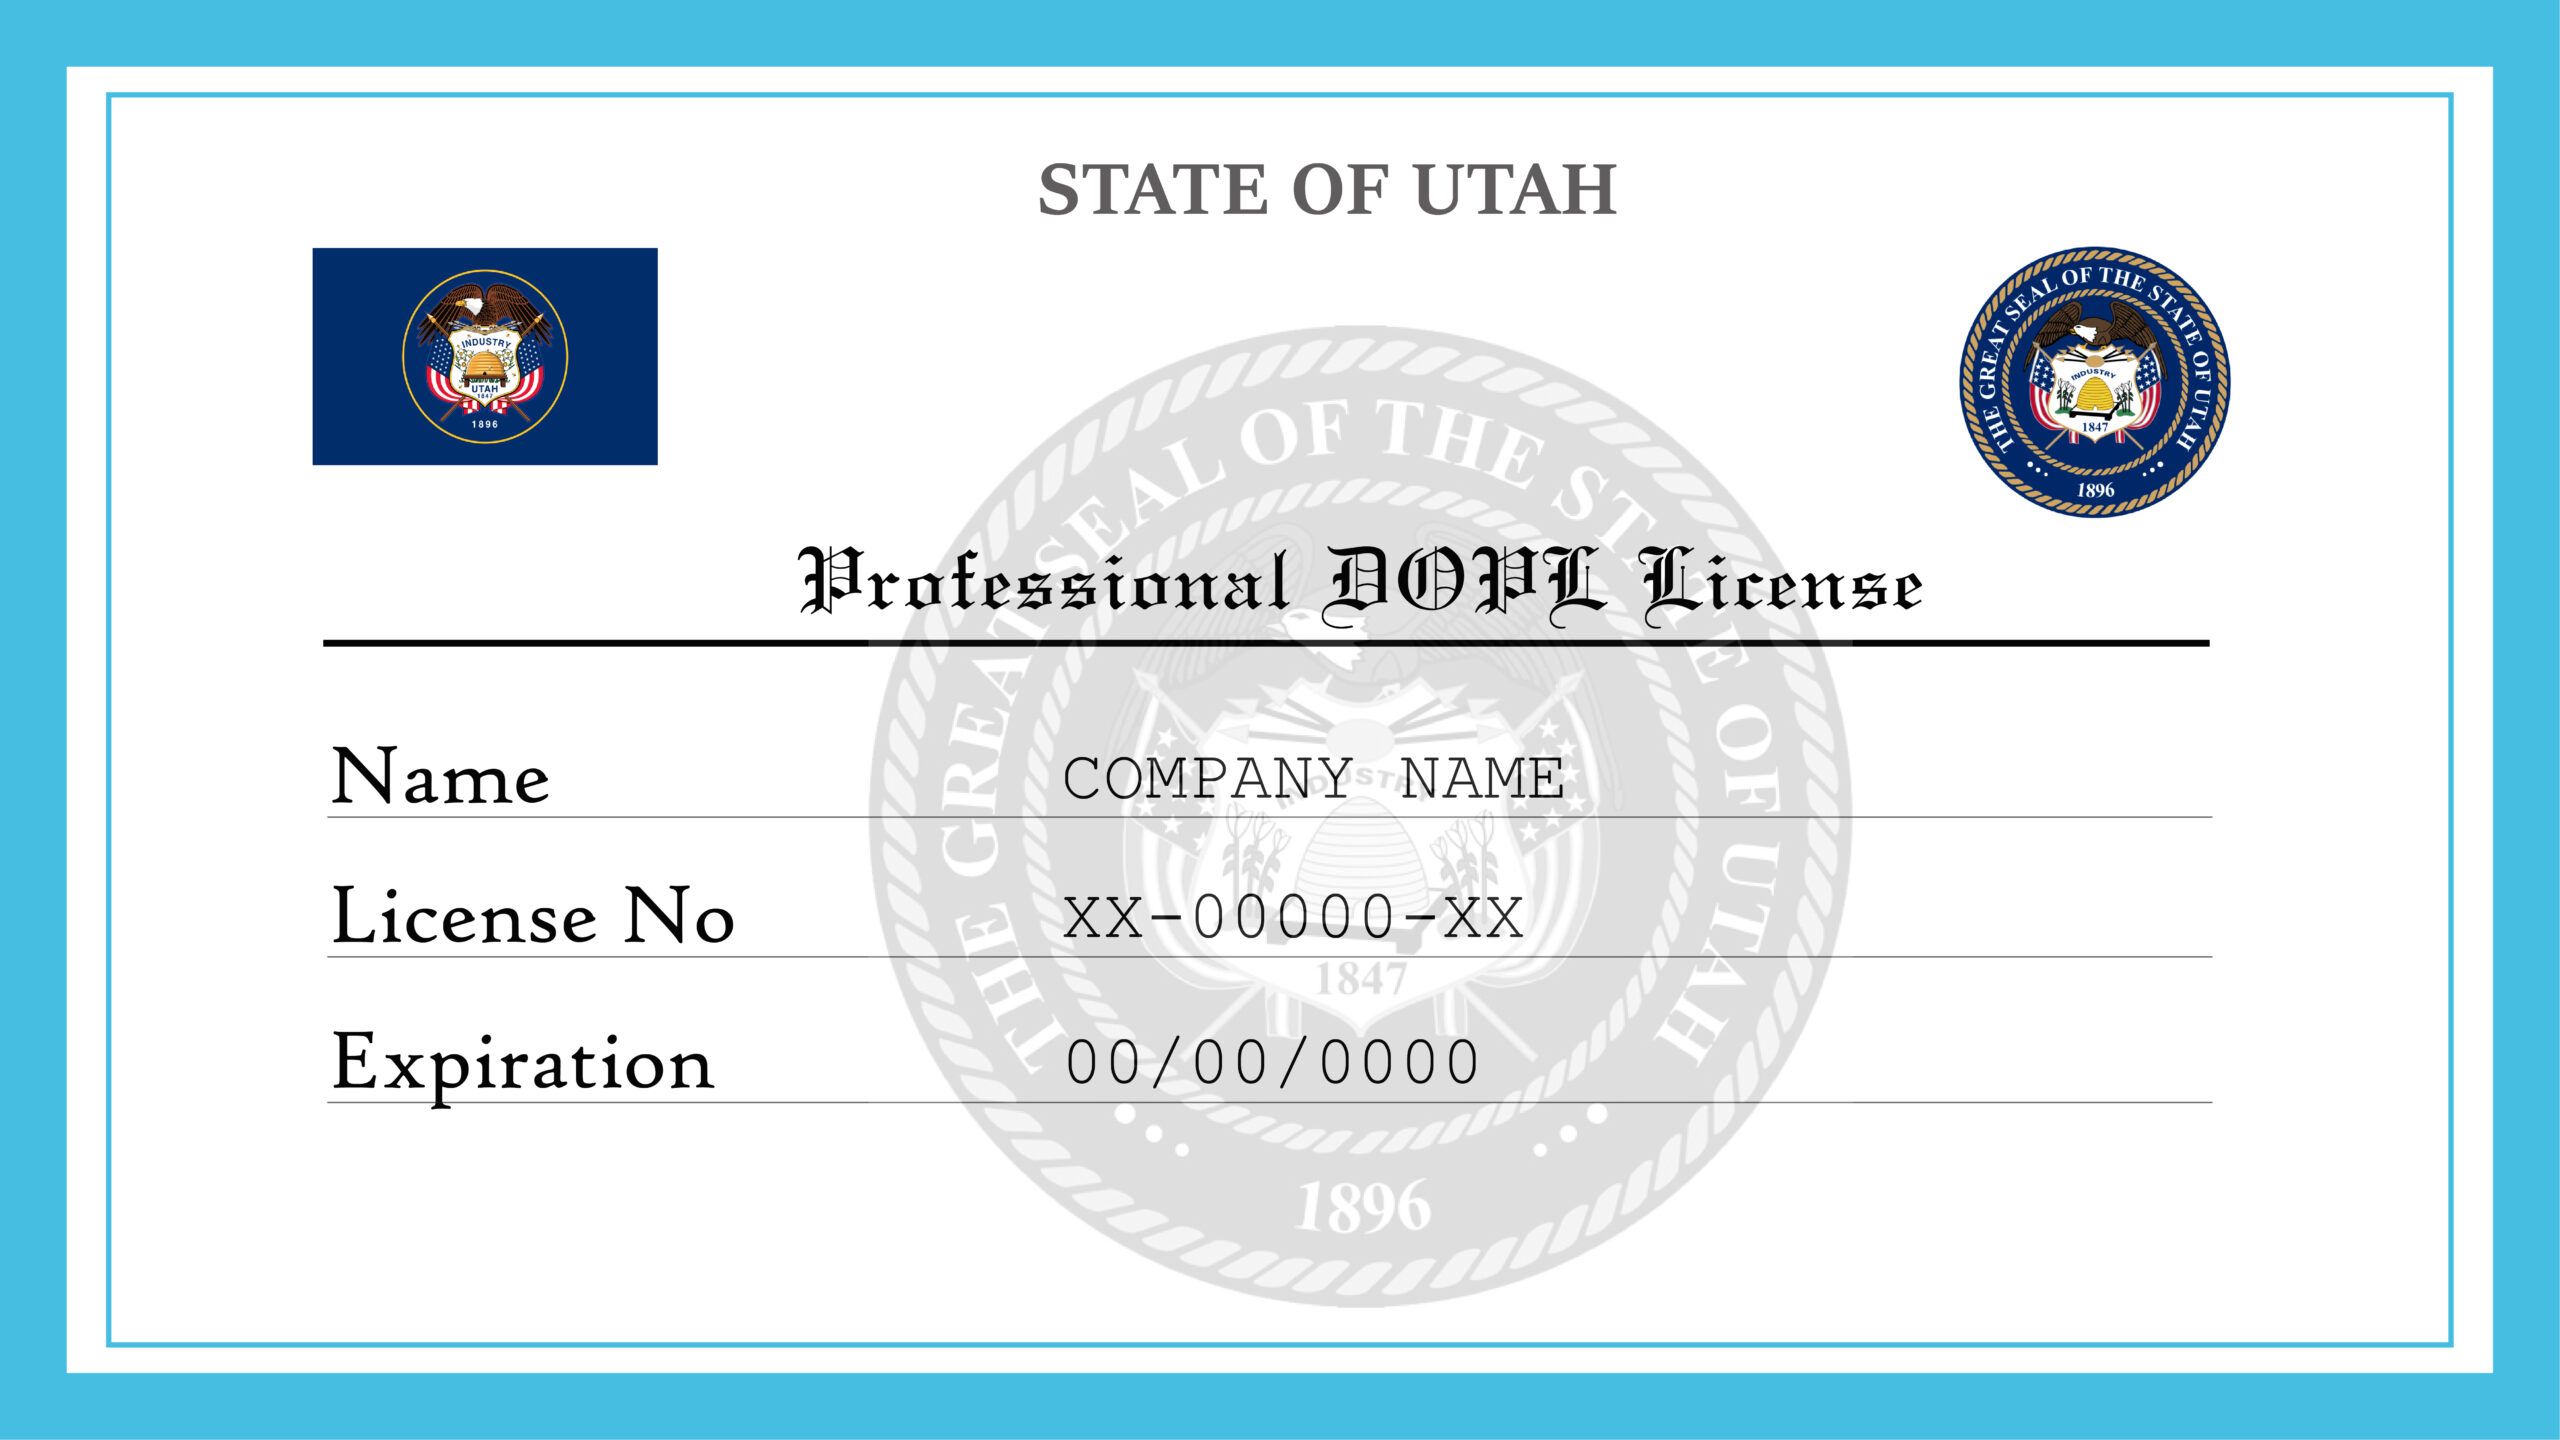 Utah residential appliance installer license prep class download the new version